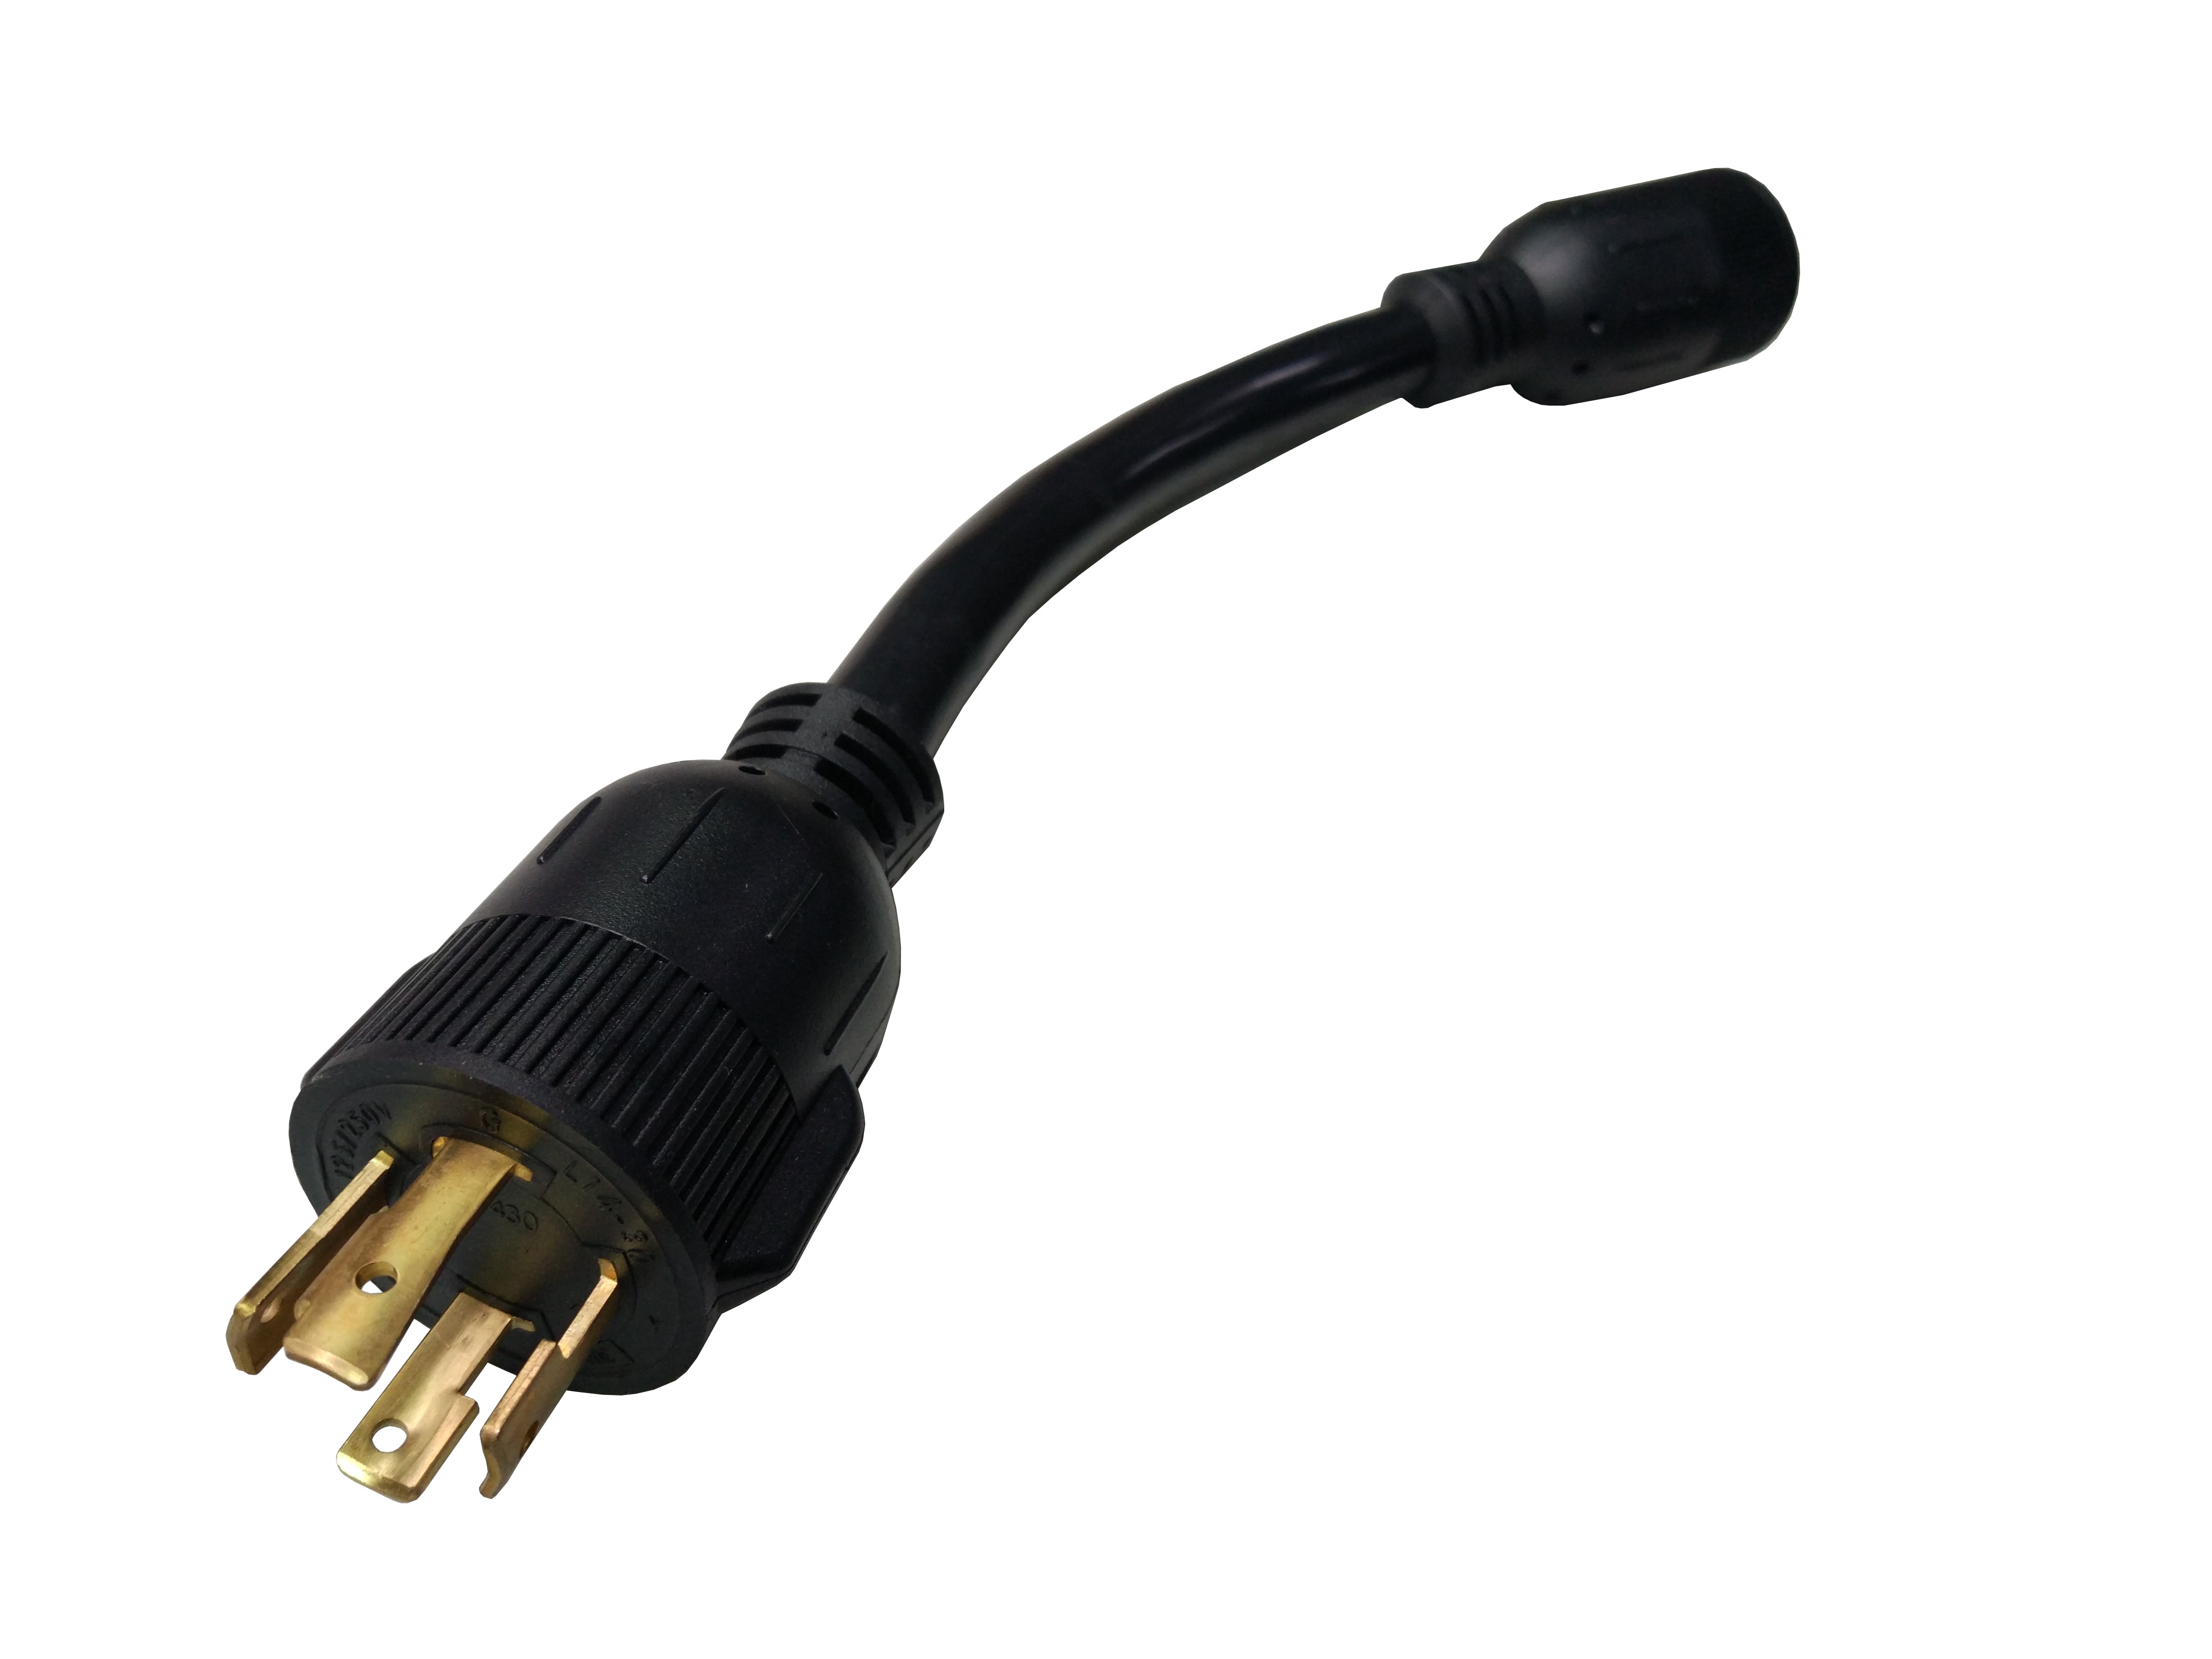 NEMA L14-30P 30 Amp 125V-250V 4 Wire Twist Lock Electrical Plug Connector USA 